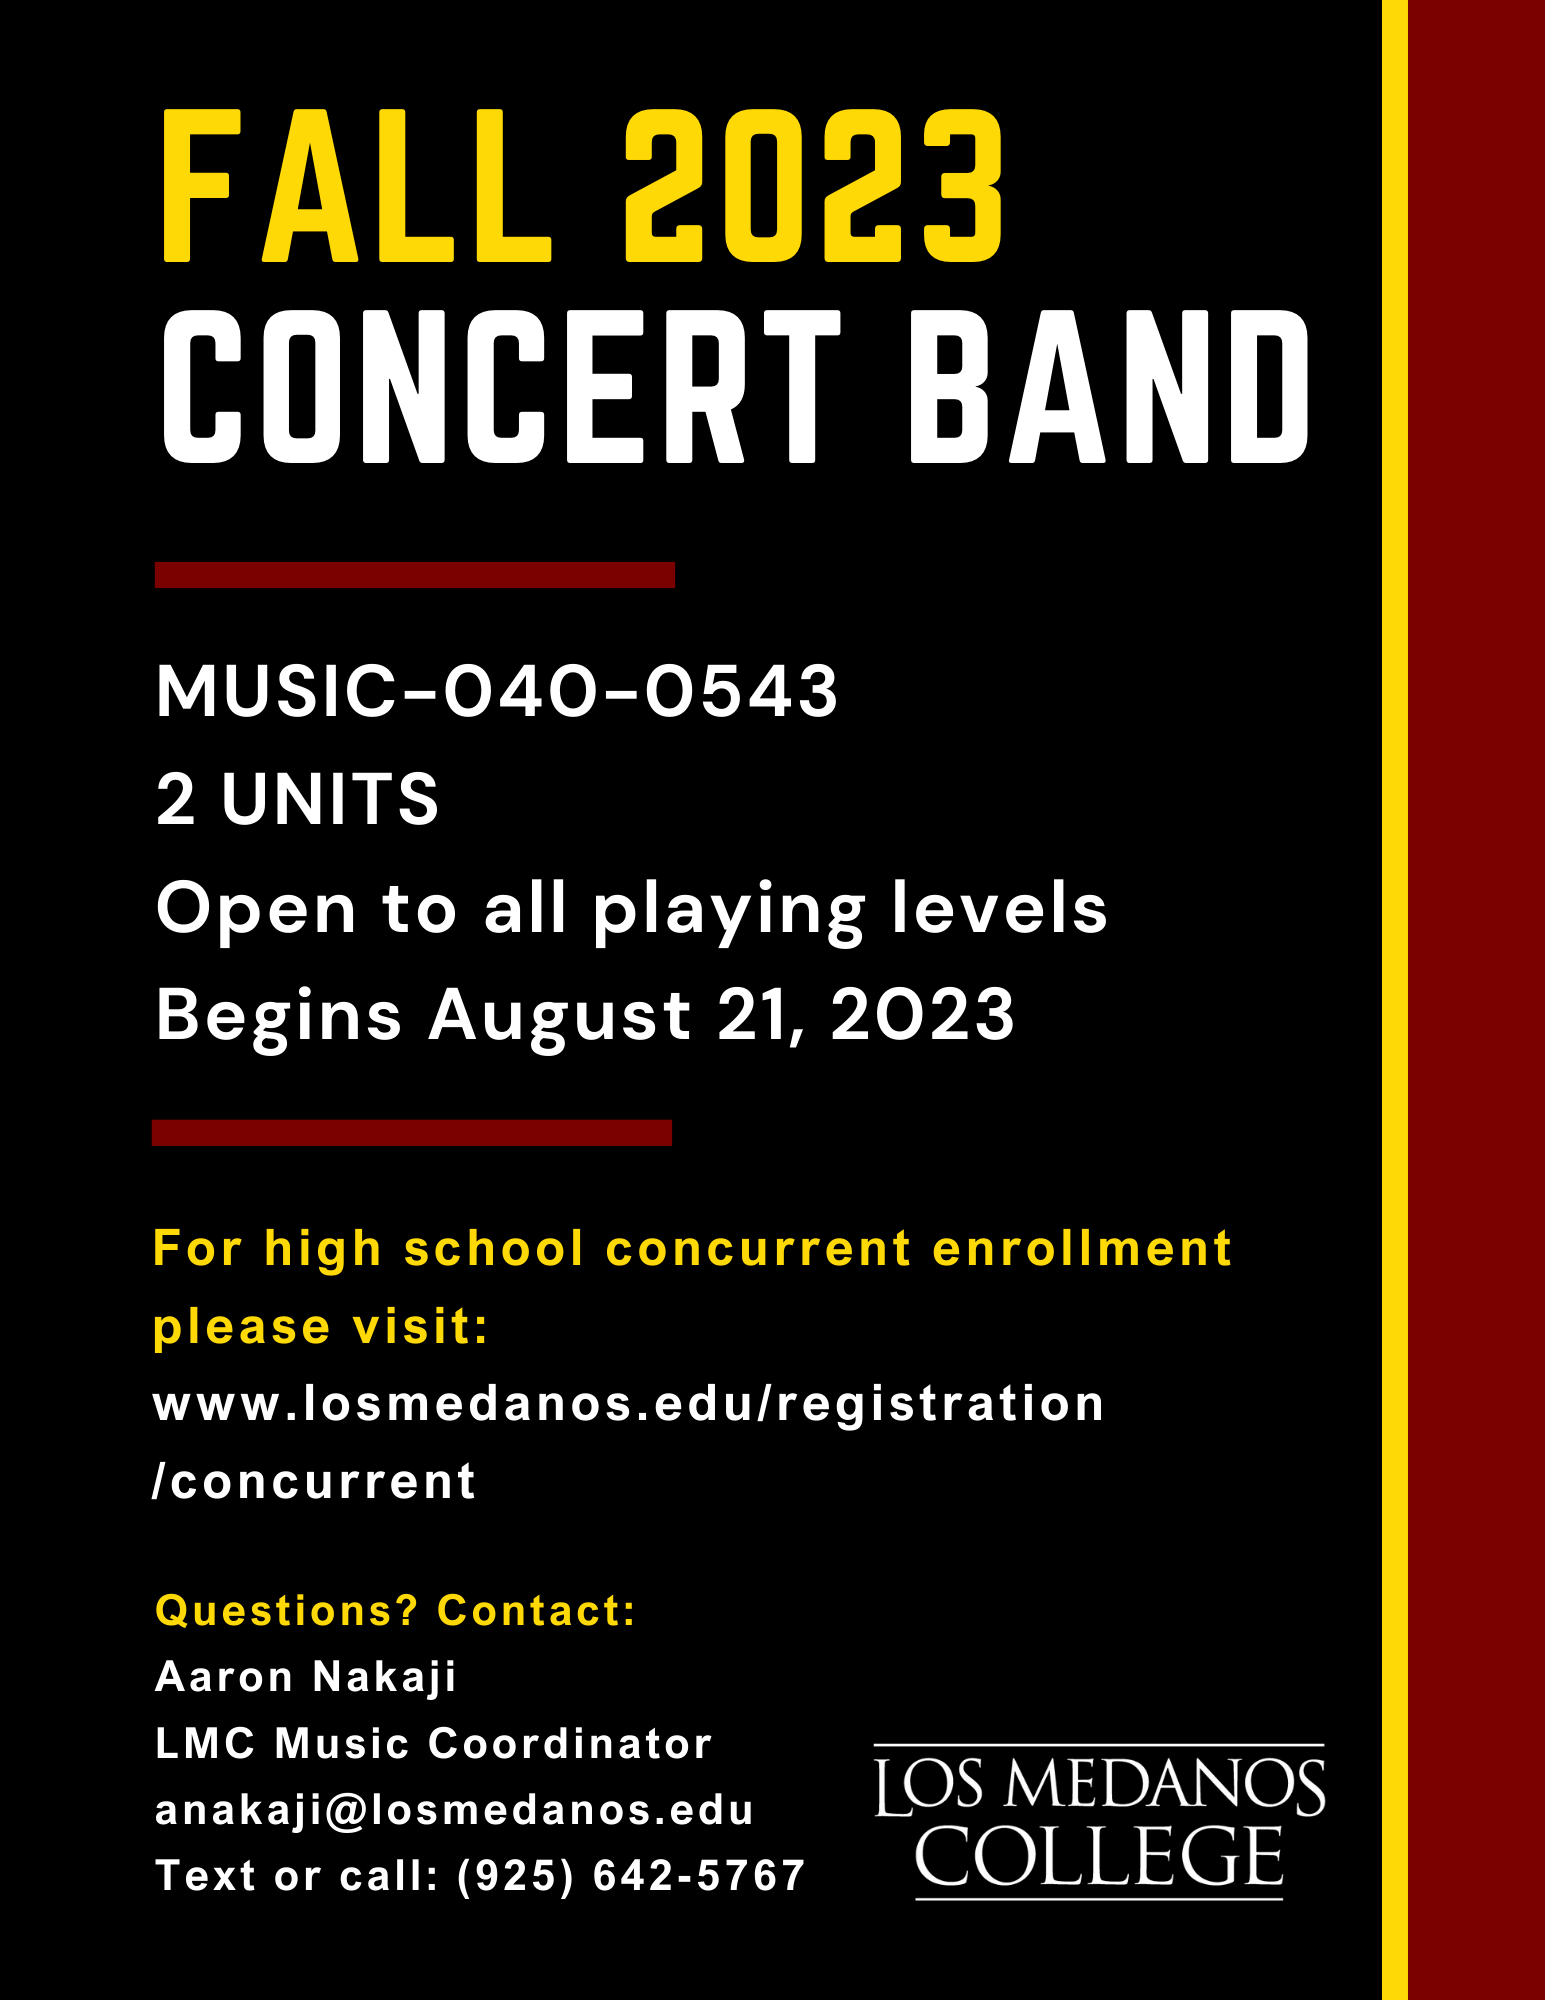 Fall 2023 Concert Band Flyer